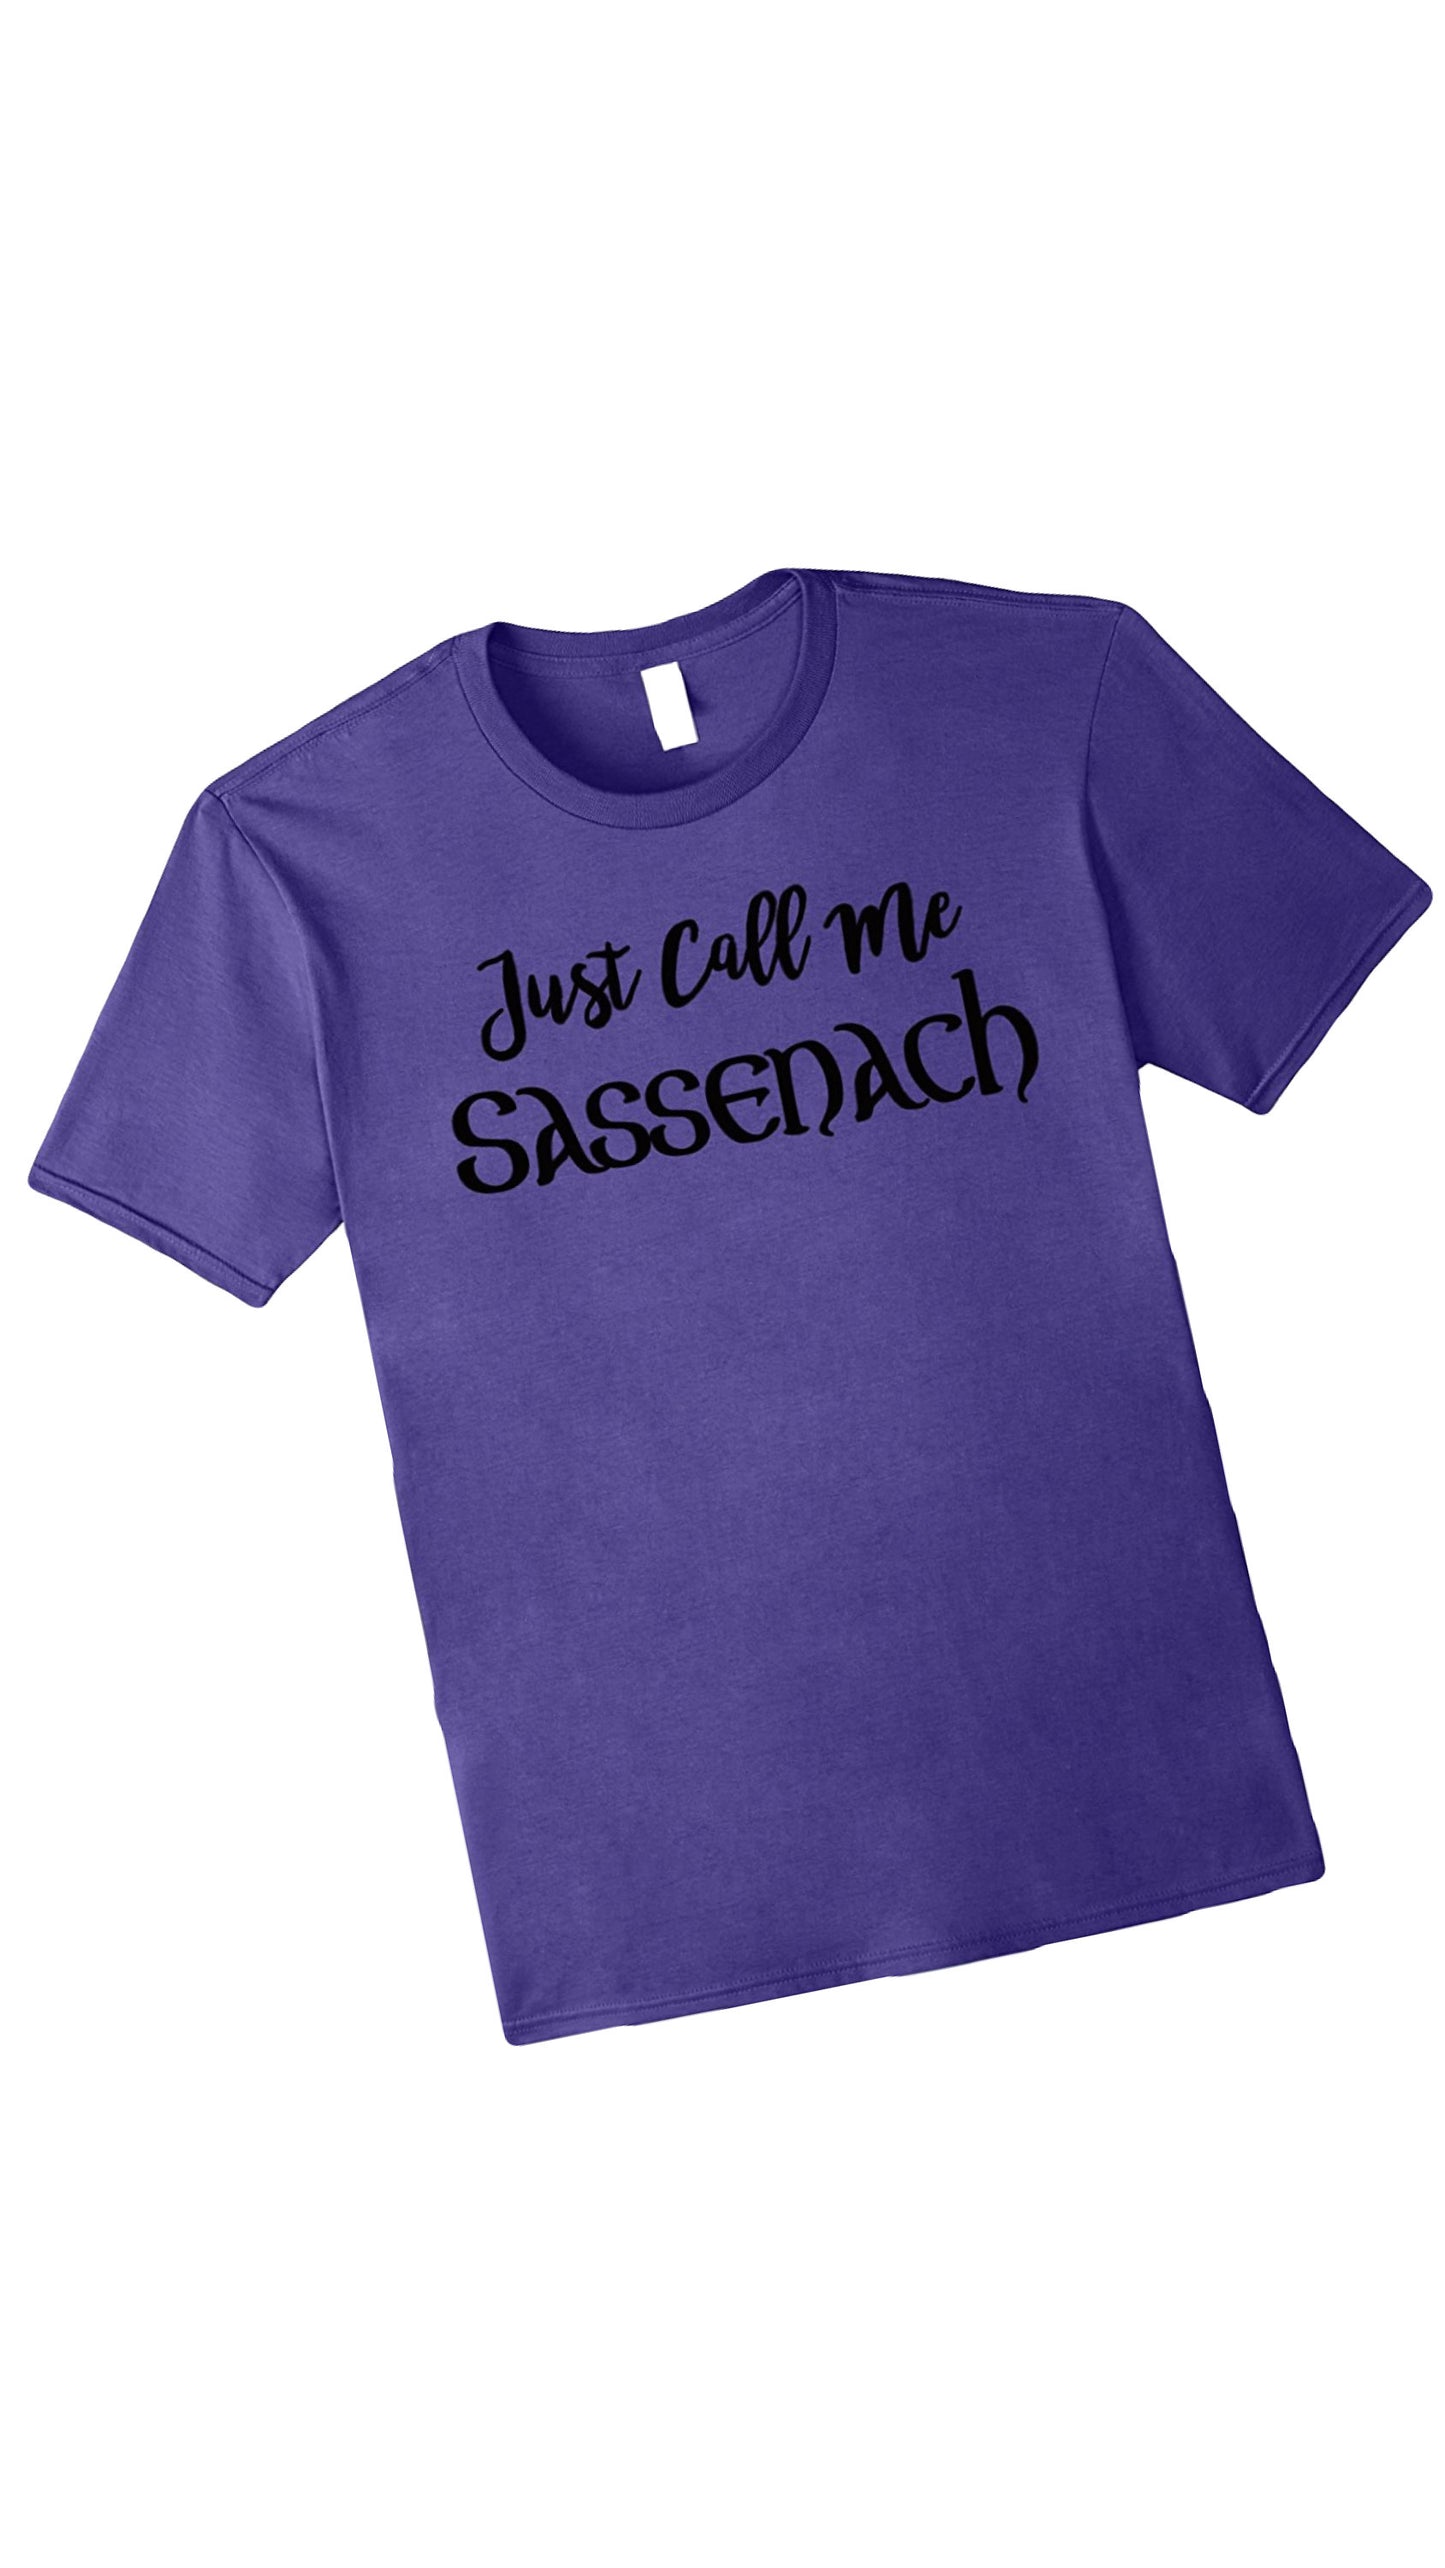 Sassenach shirt, Outlander fan shirt, outlander sassenach shirt, outlander fan gift, gift for her, christmas gift, jamie frazier, Sassenach